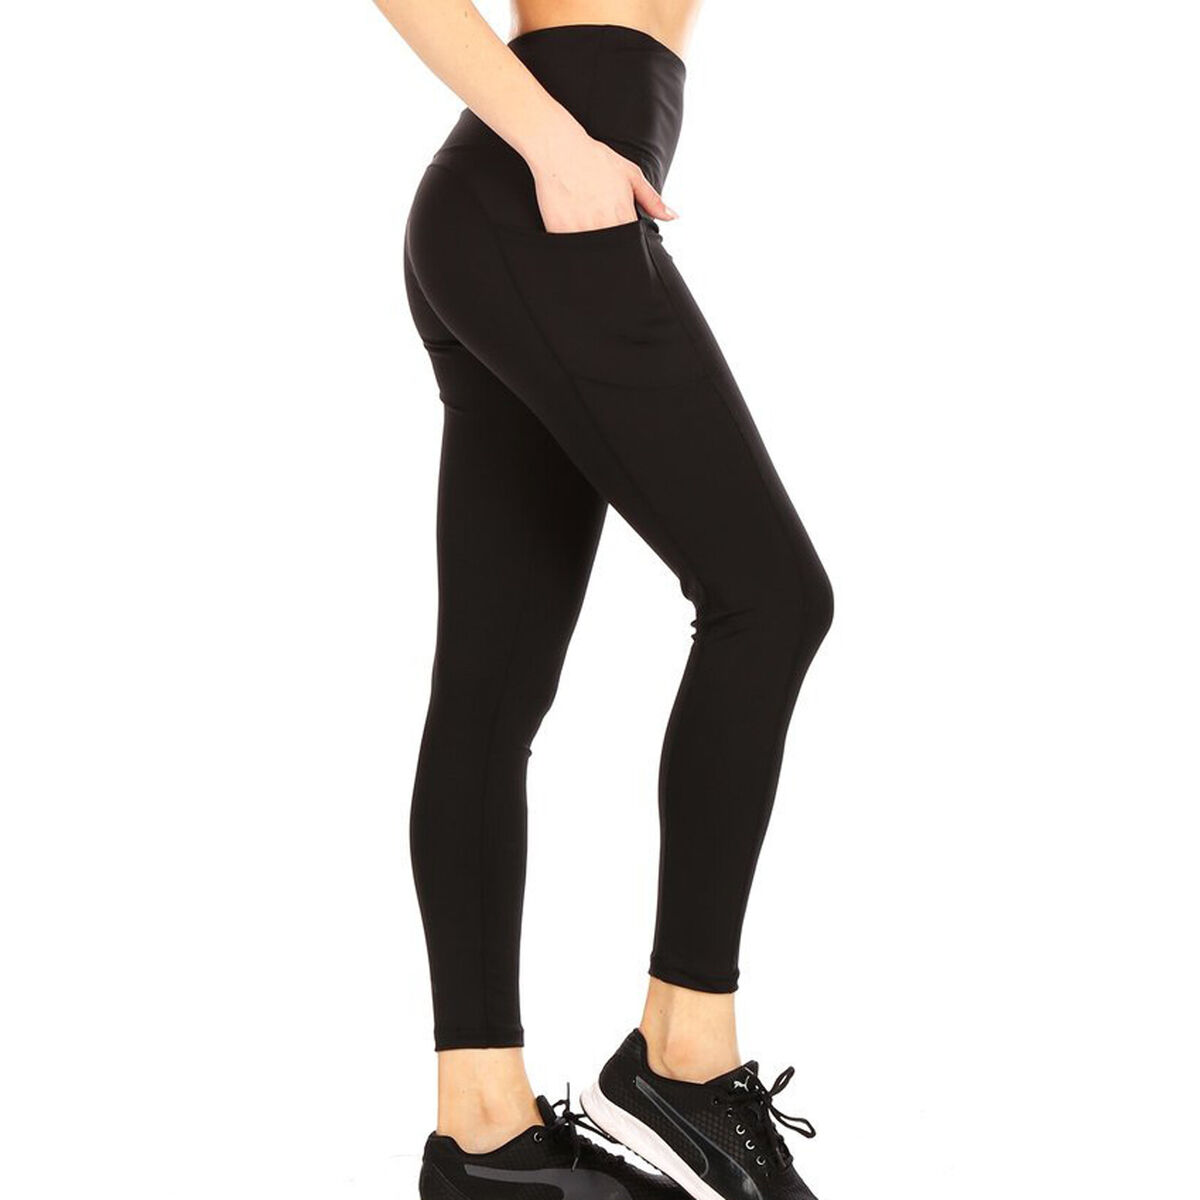 SHOSHO High Waist Tummy Control Pockets Activewear Yoga Black Leggings -  Choose